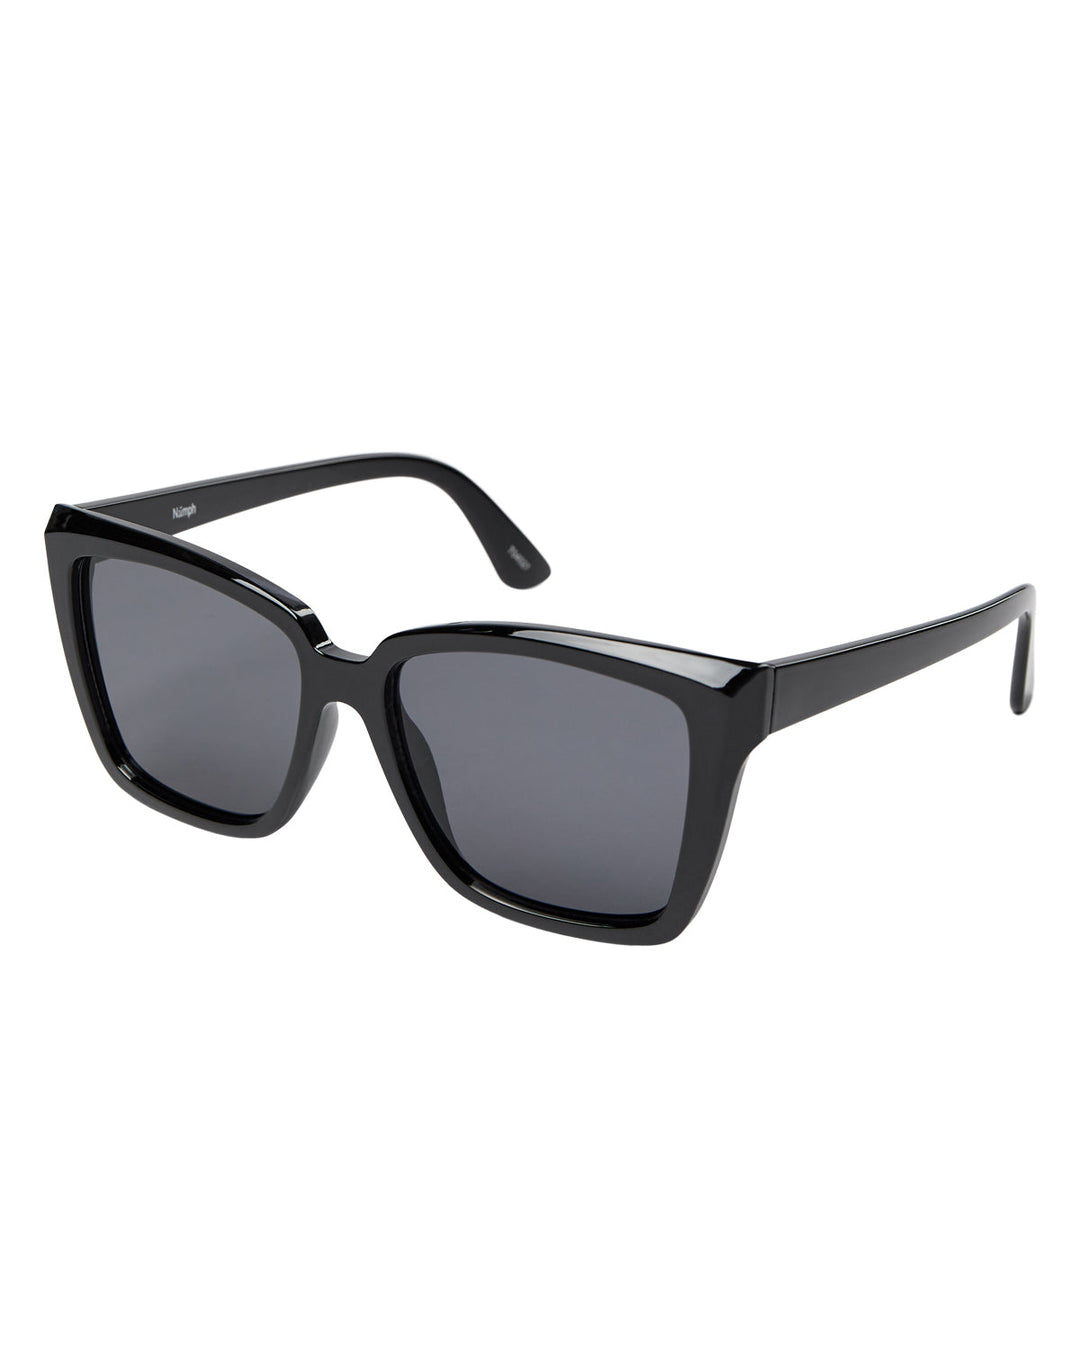 Numph Nuolive Caviar Black Sunglasses